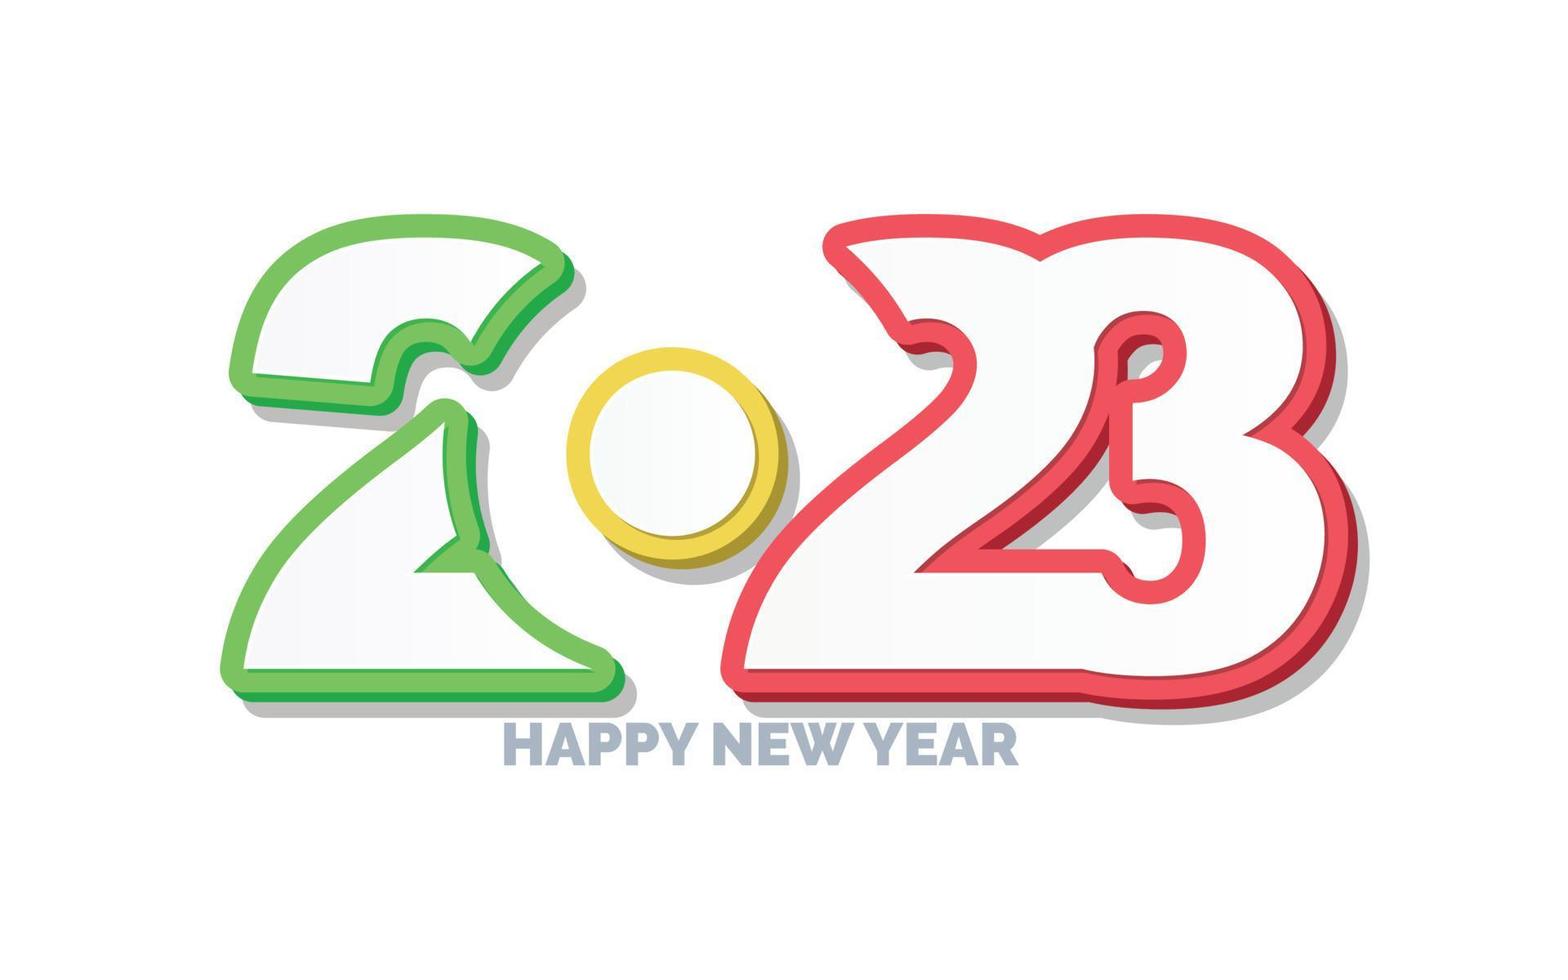 design de logotipo 3d feliz ano novo 2023 vetor